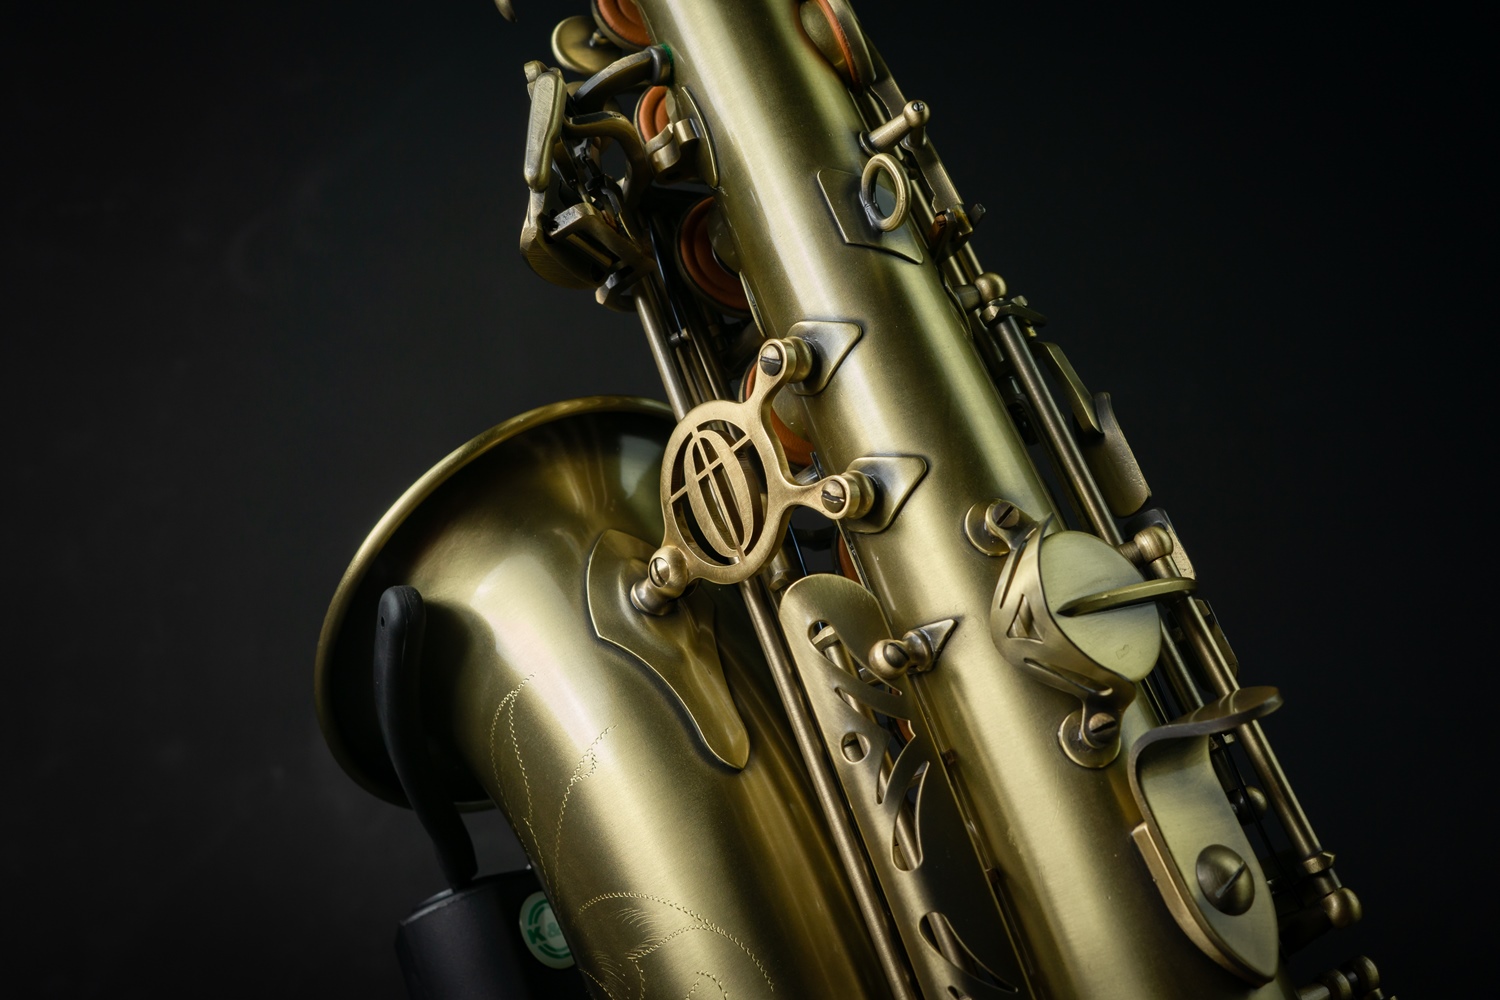 Overtone Alto Saxophone รุ่น vintage OSA-301